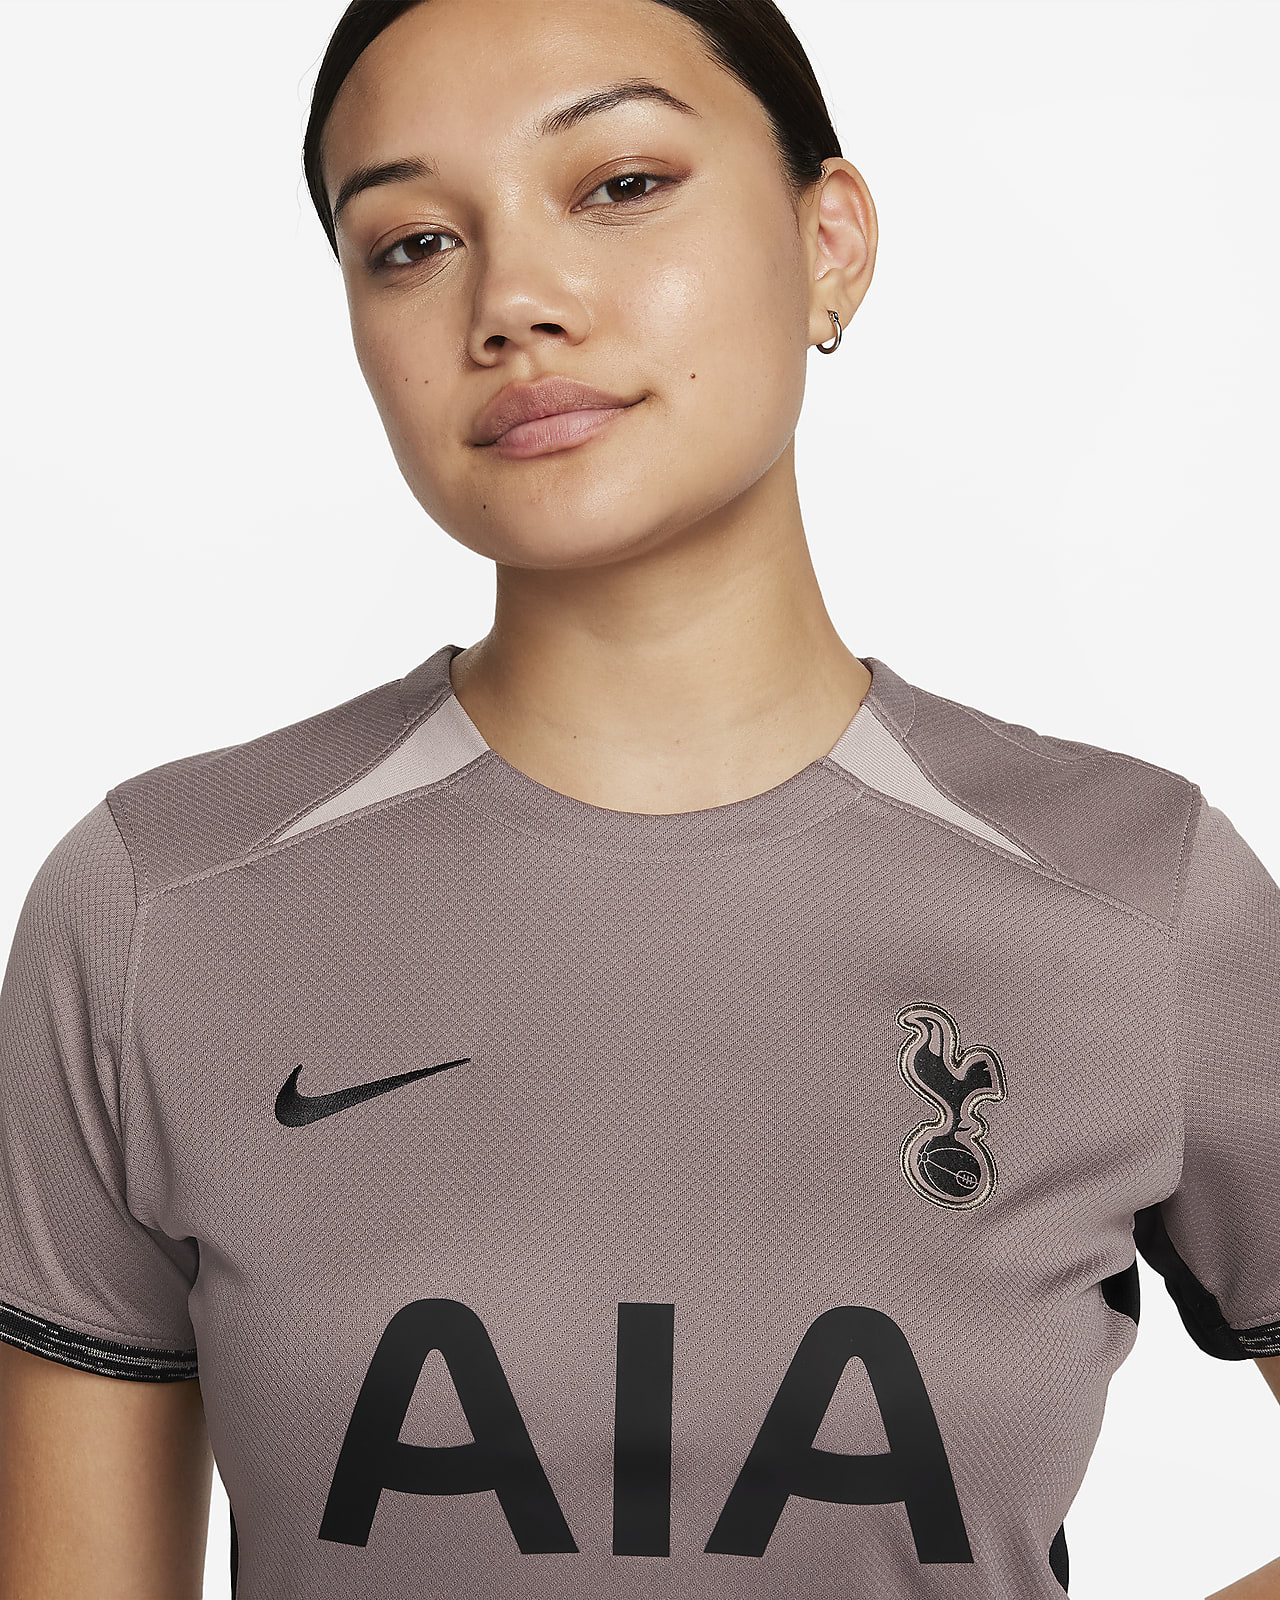 Tottenham Third Kit & Shirts 23/24. Nike UK